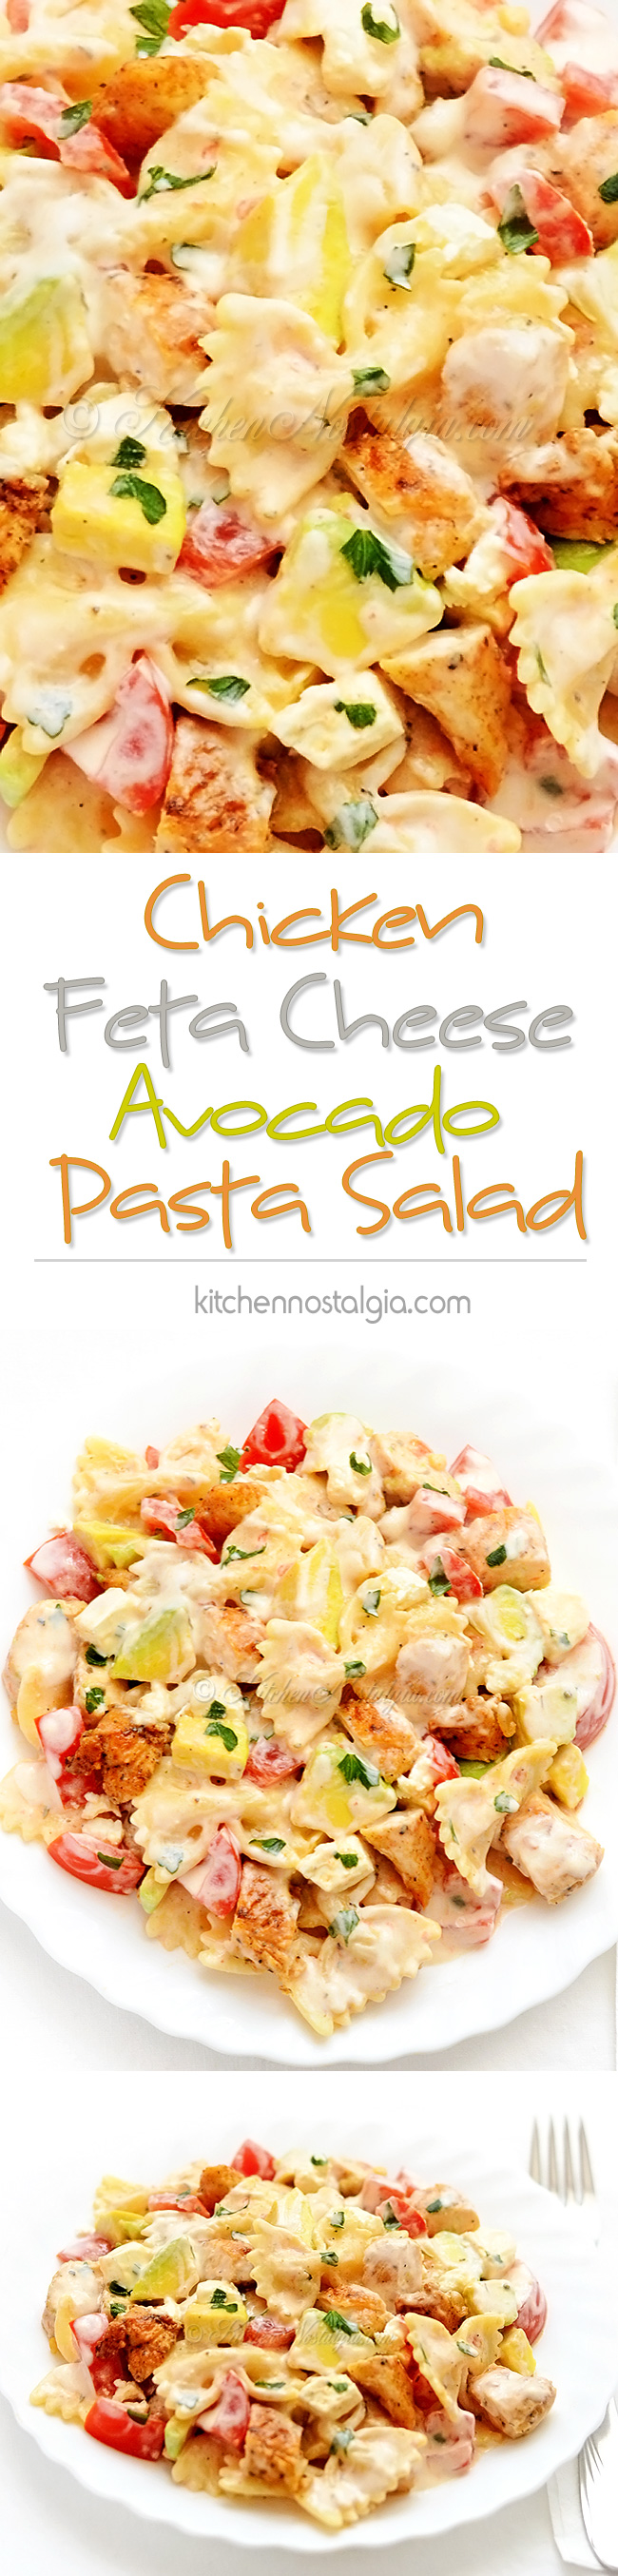 Chicken Feta Cheese Pasta Salad